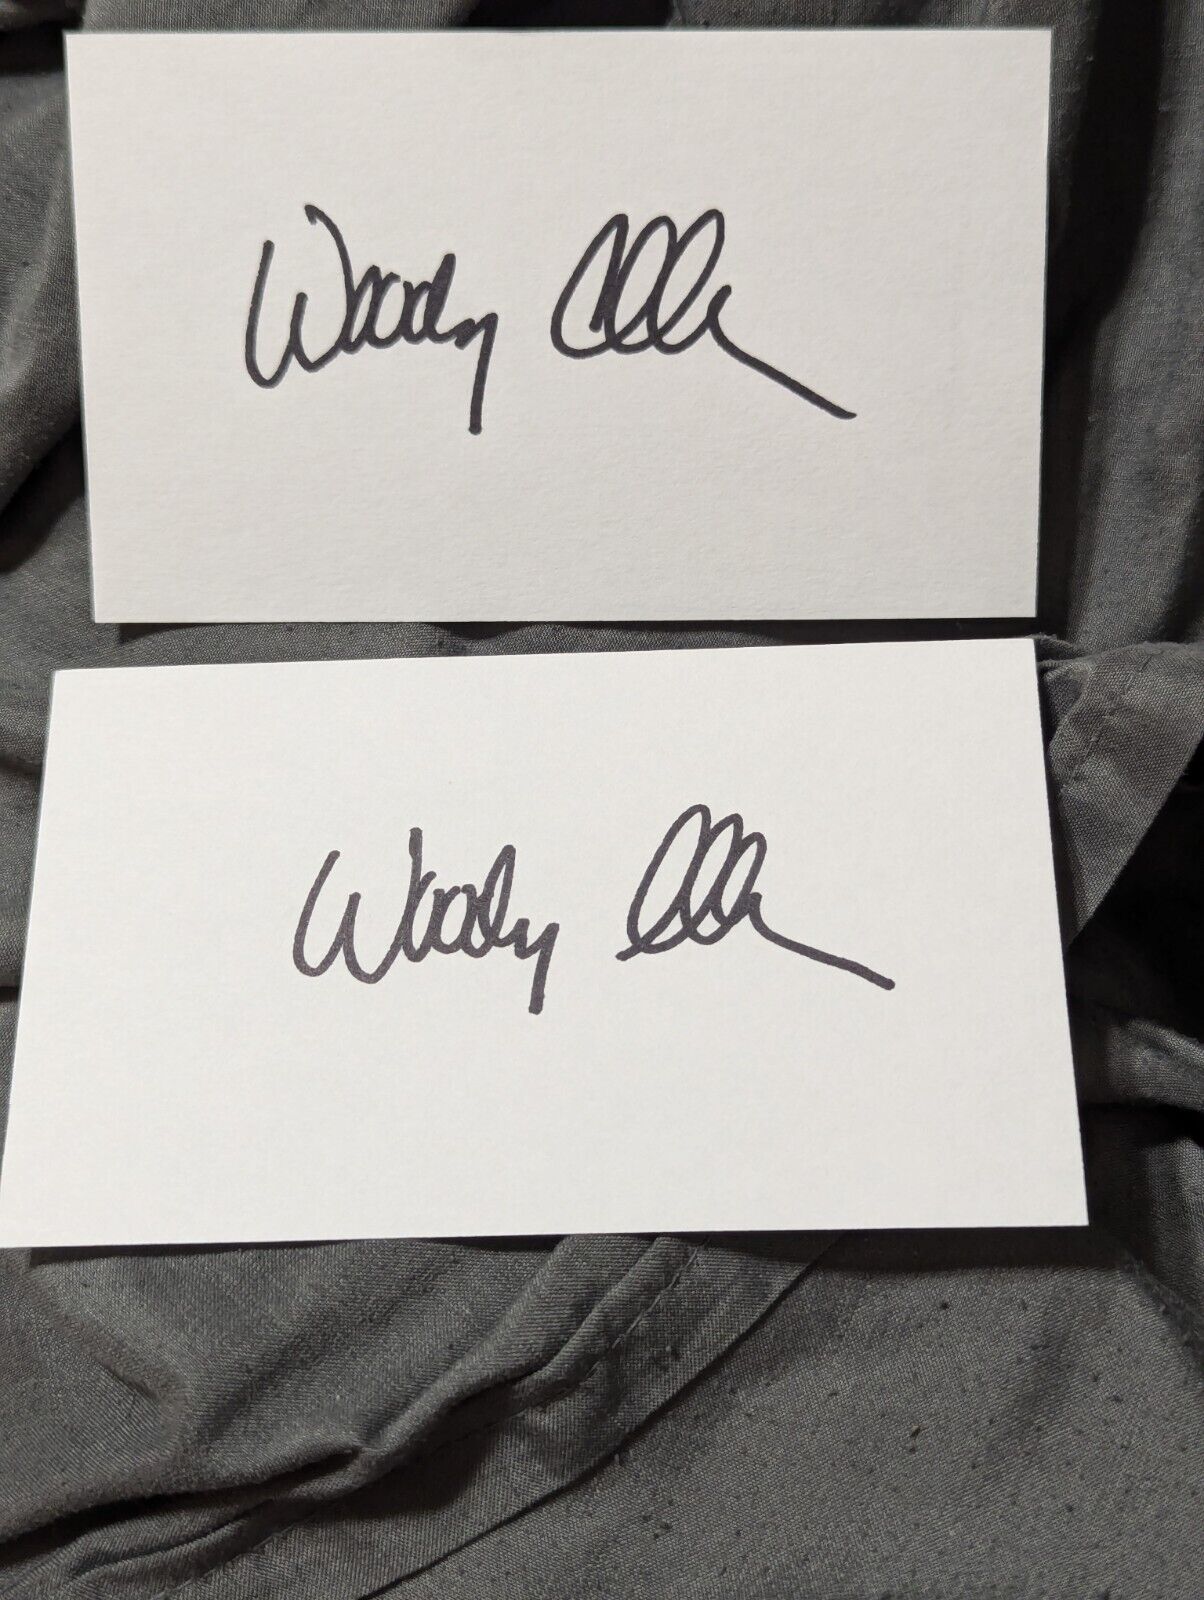 BOGO Woody Allen Autograph Signed